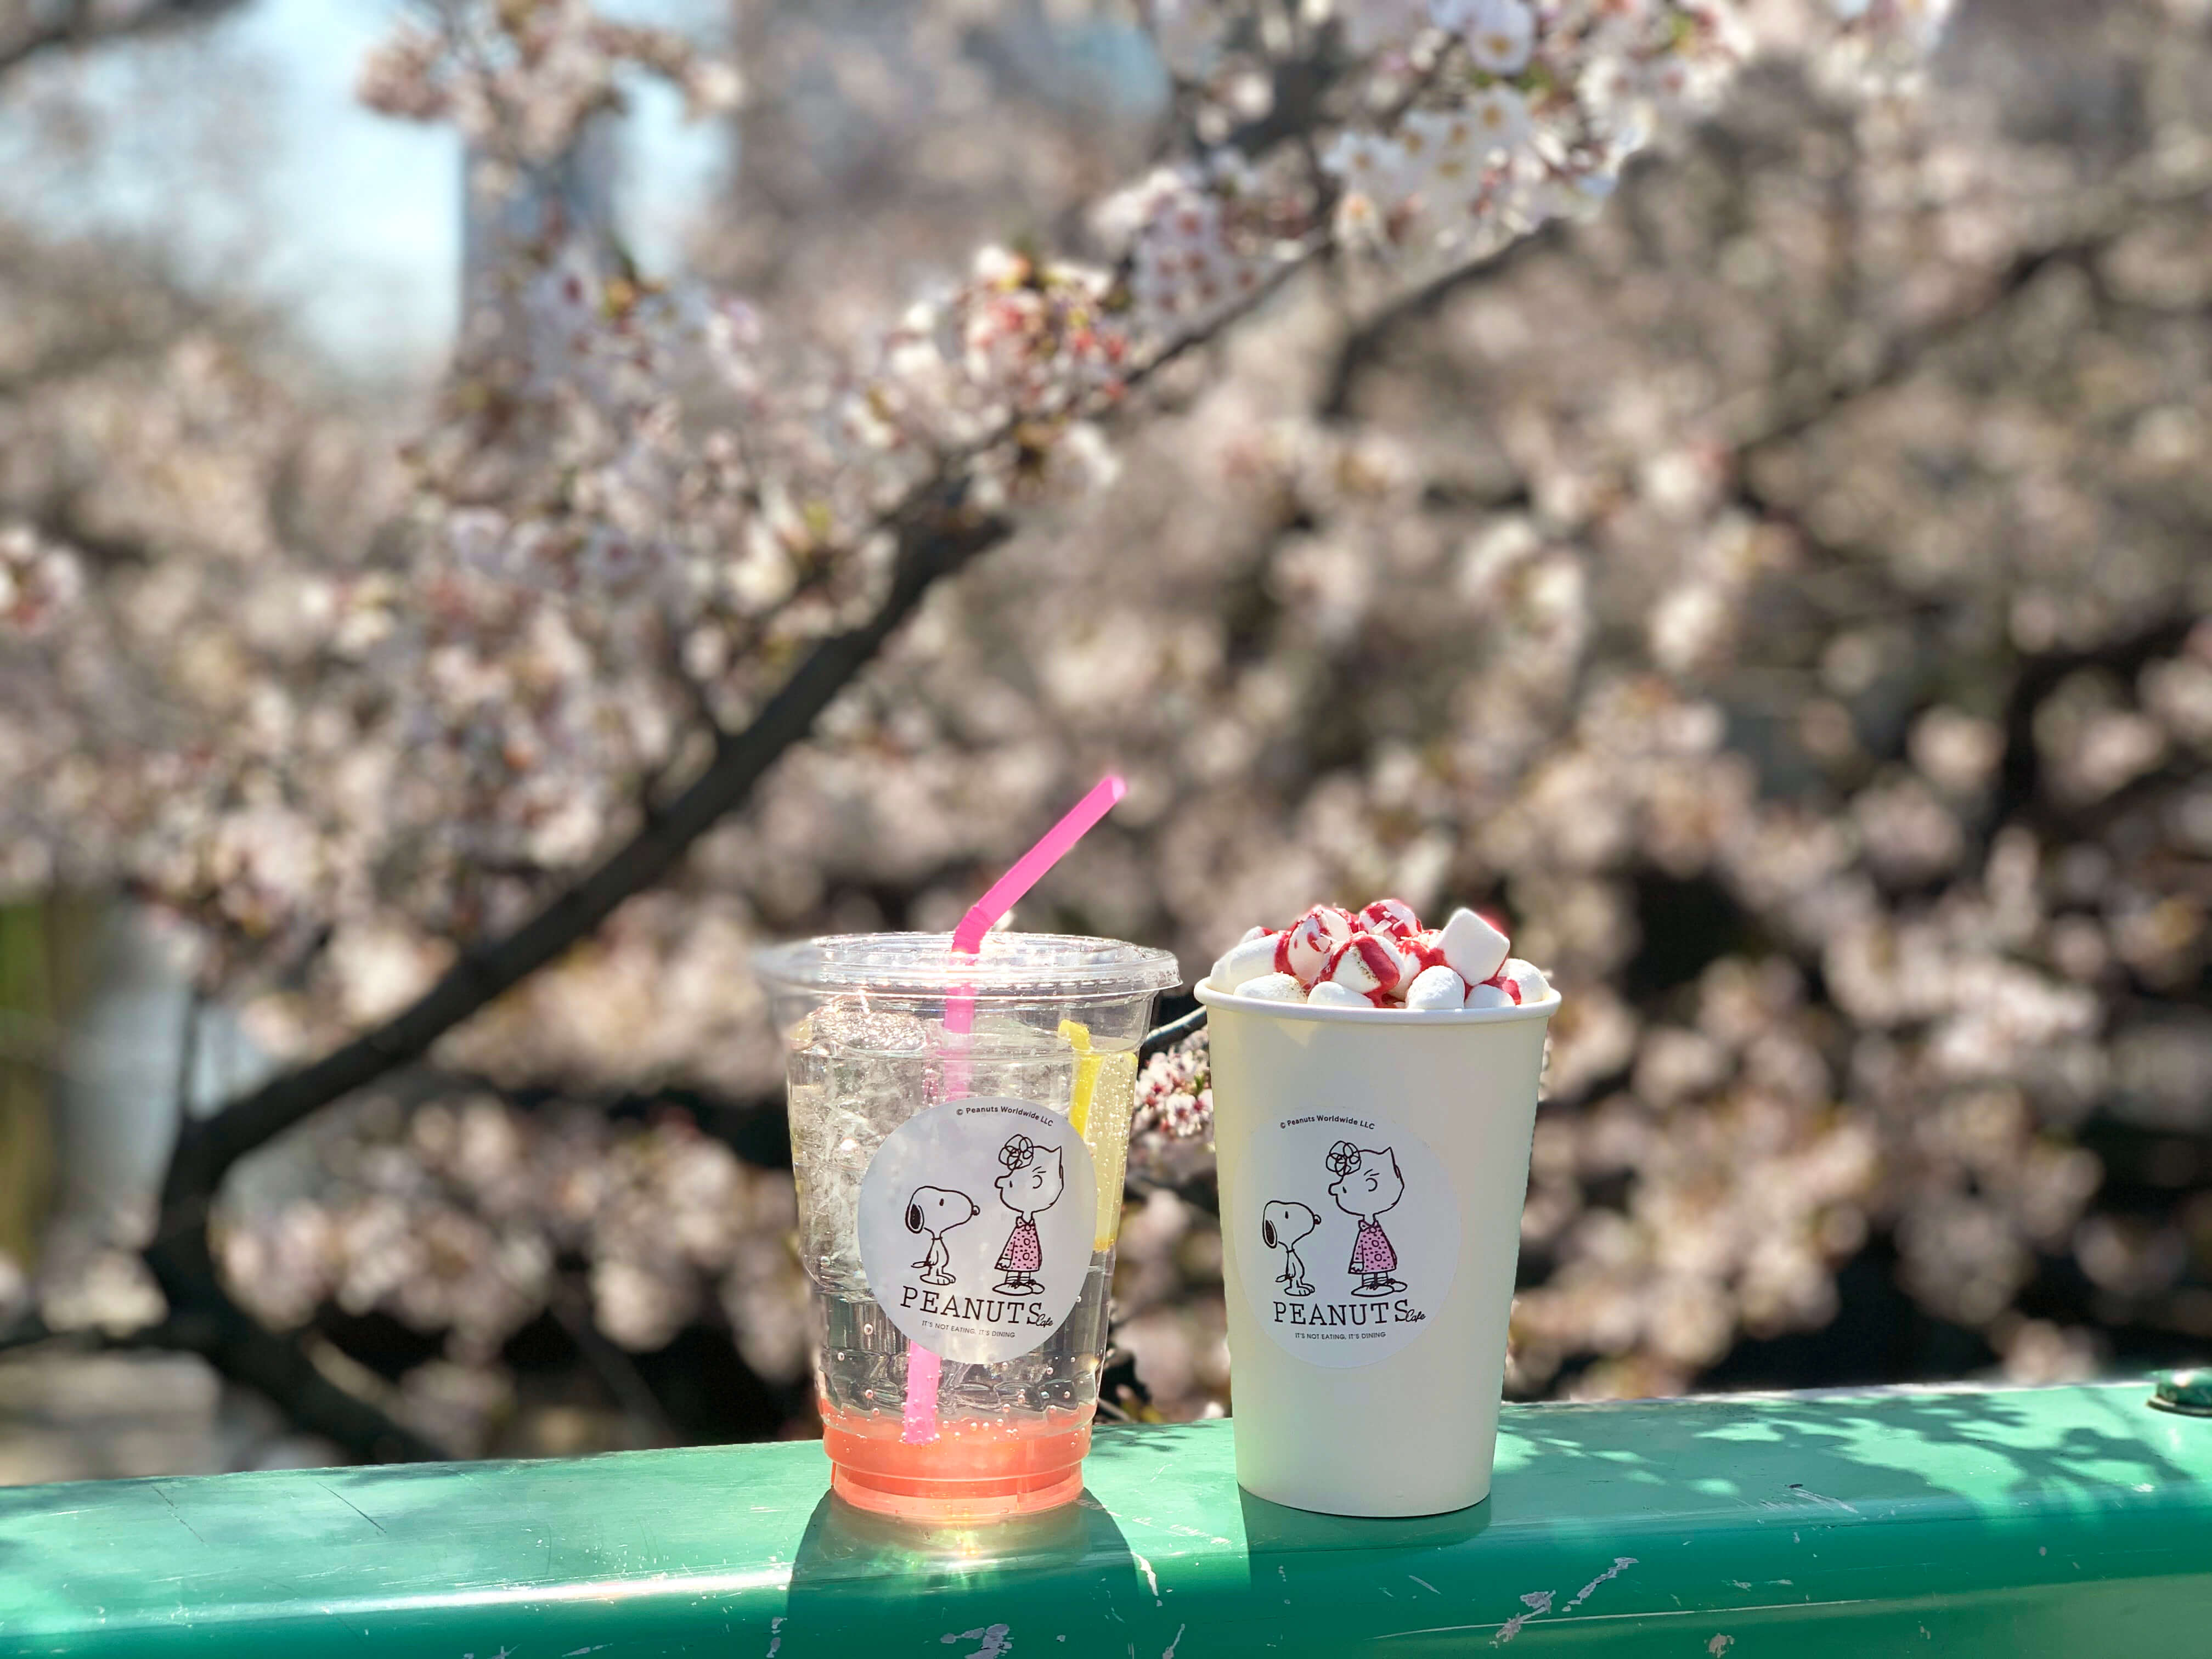 Starbucks Japan Sakura Tumbler, Drinks & Collectibles To Get Your Hands On  - Klook Travel Blog